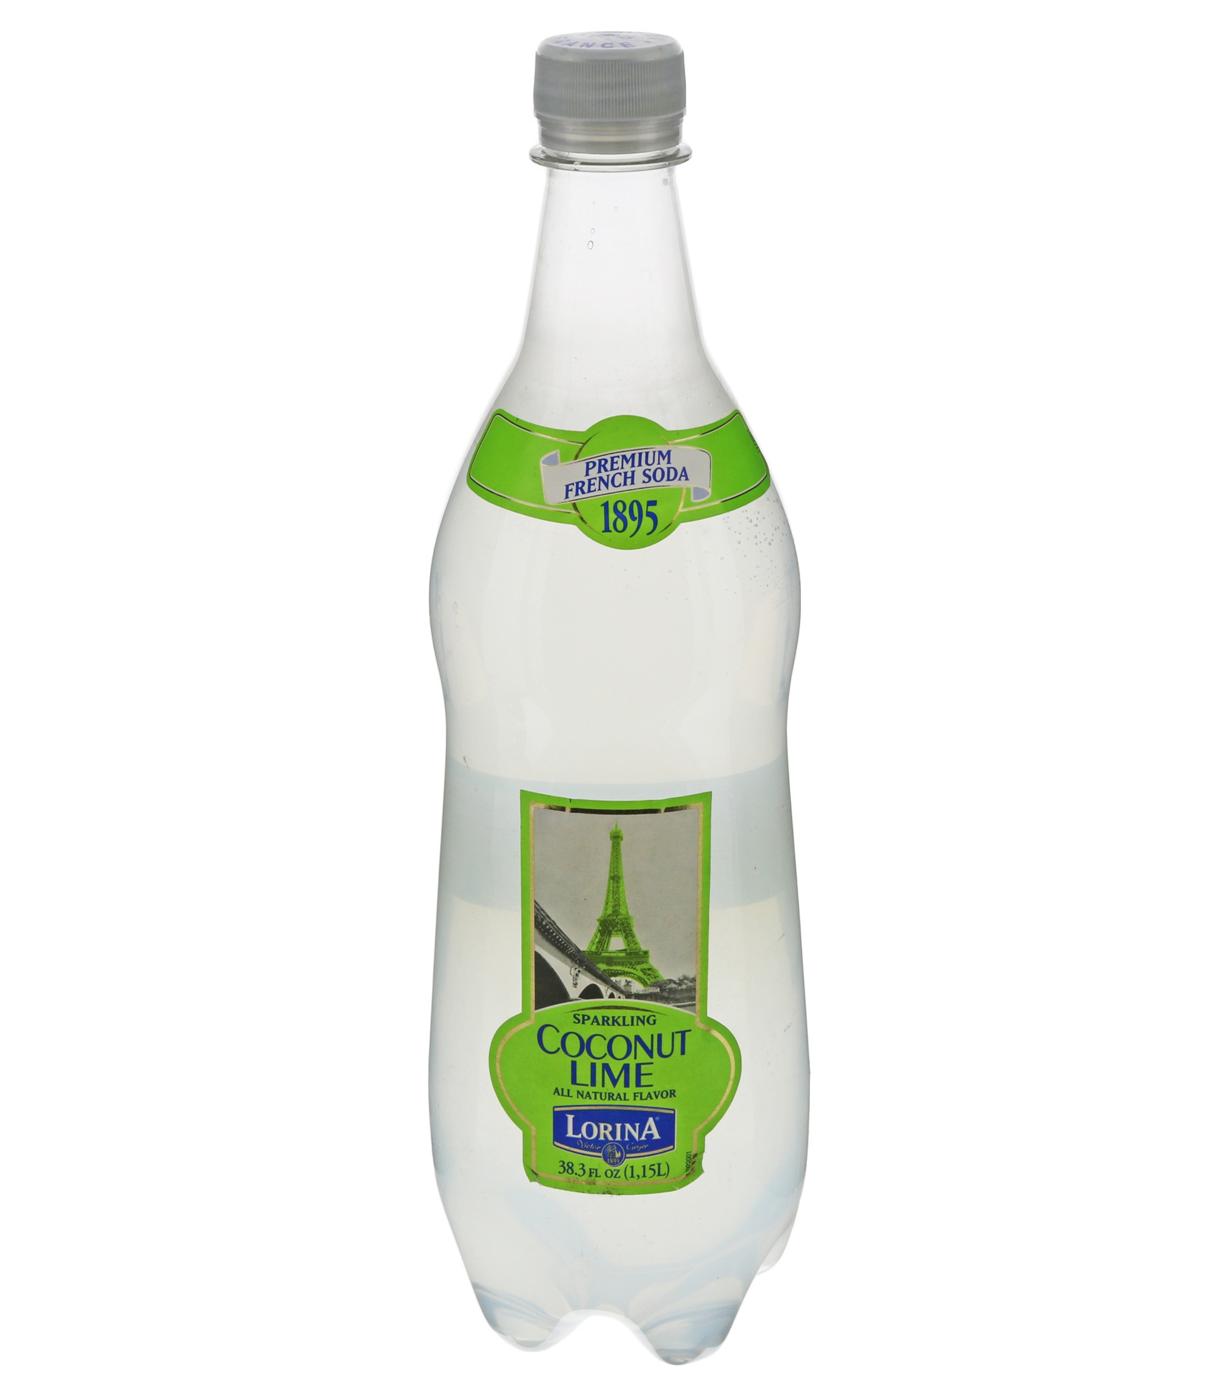 Lorina Premium French Coconut Lime Sparkling Soda; image 1 of 3